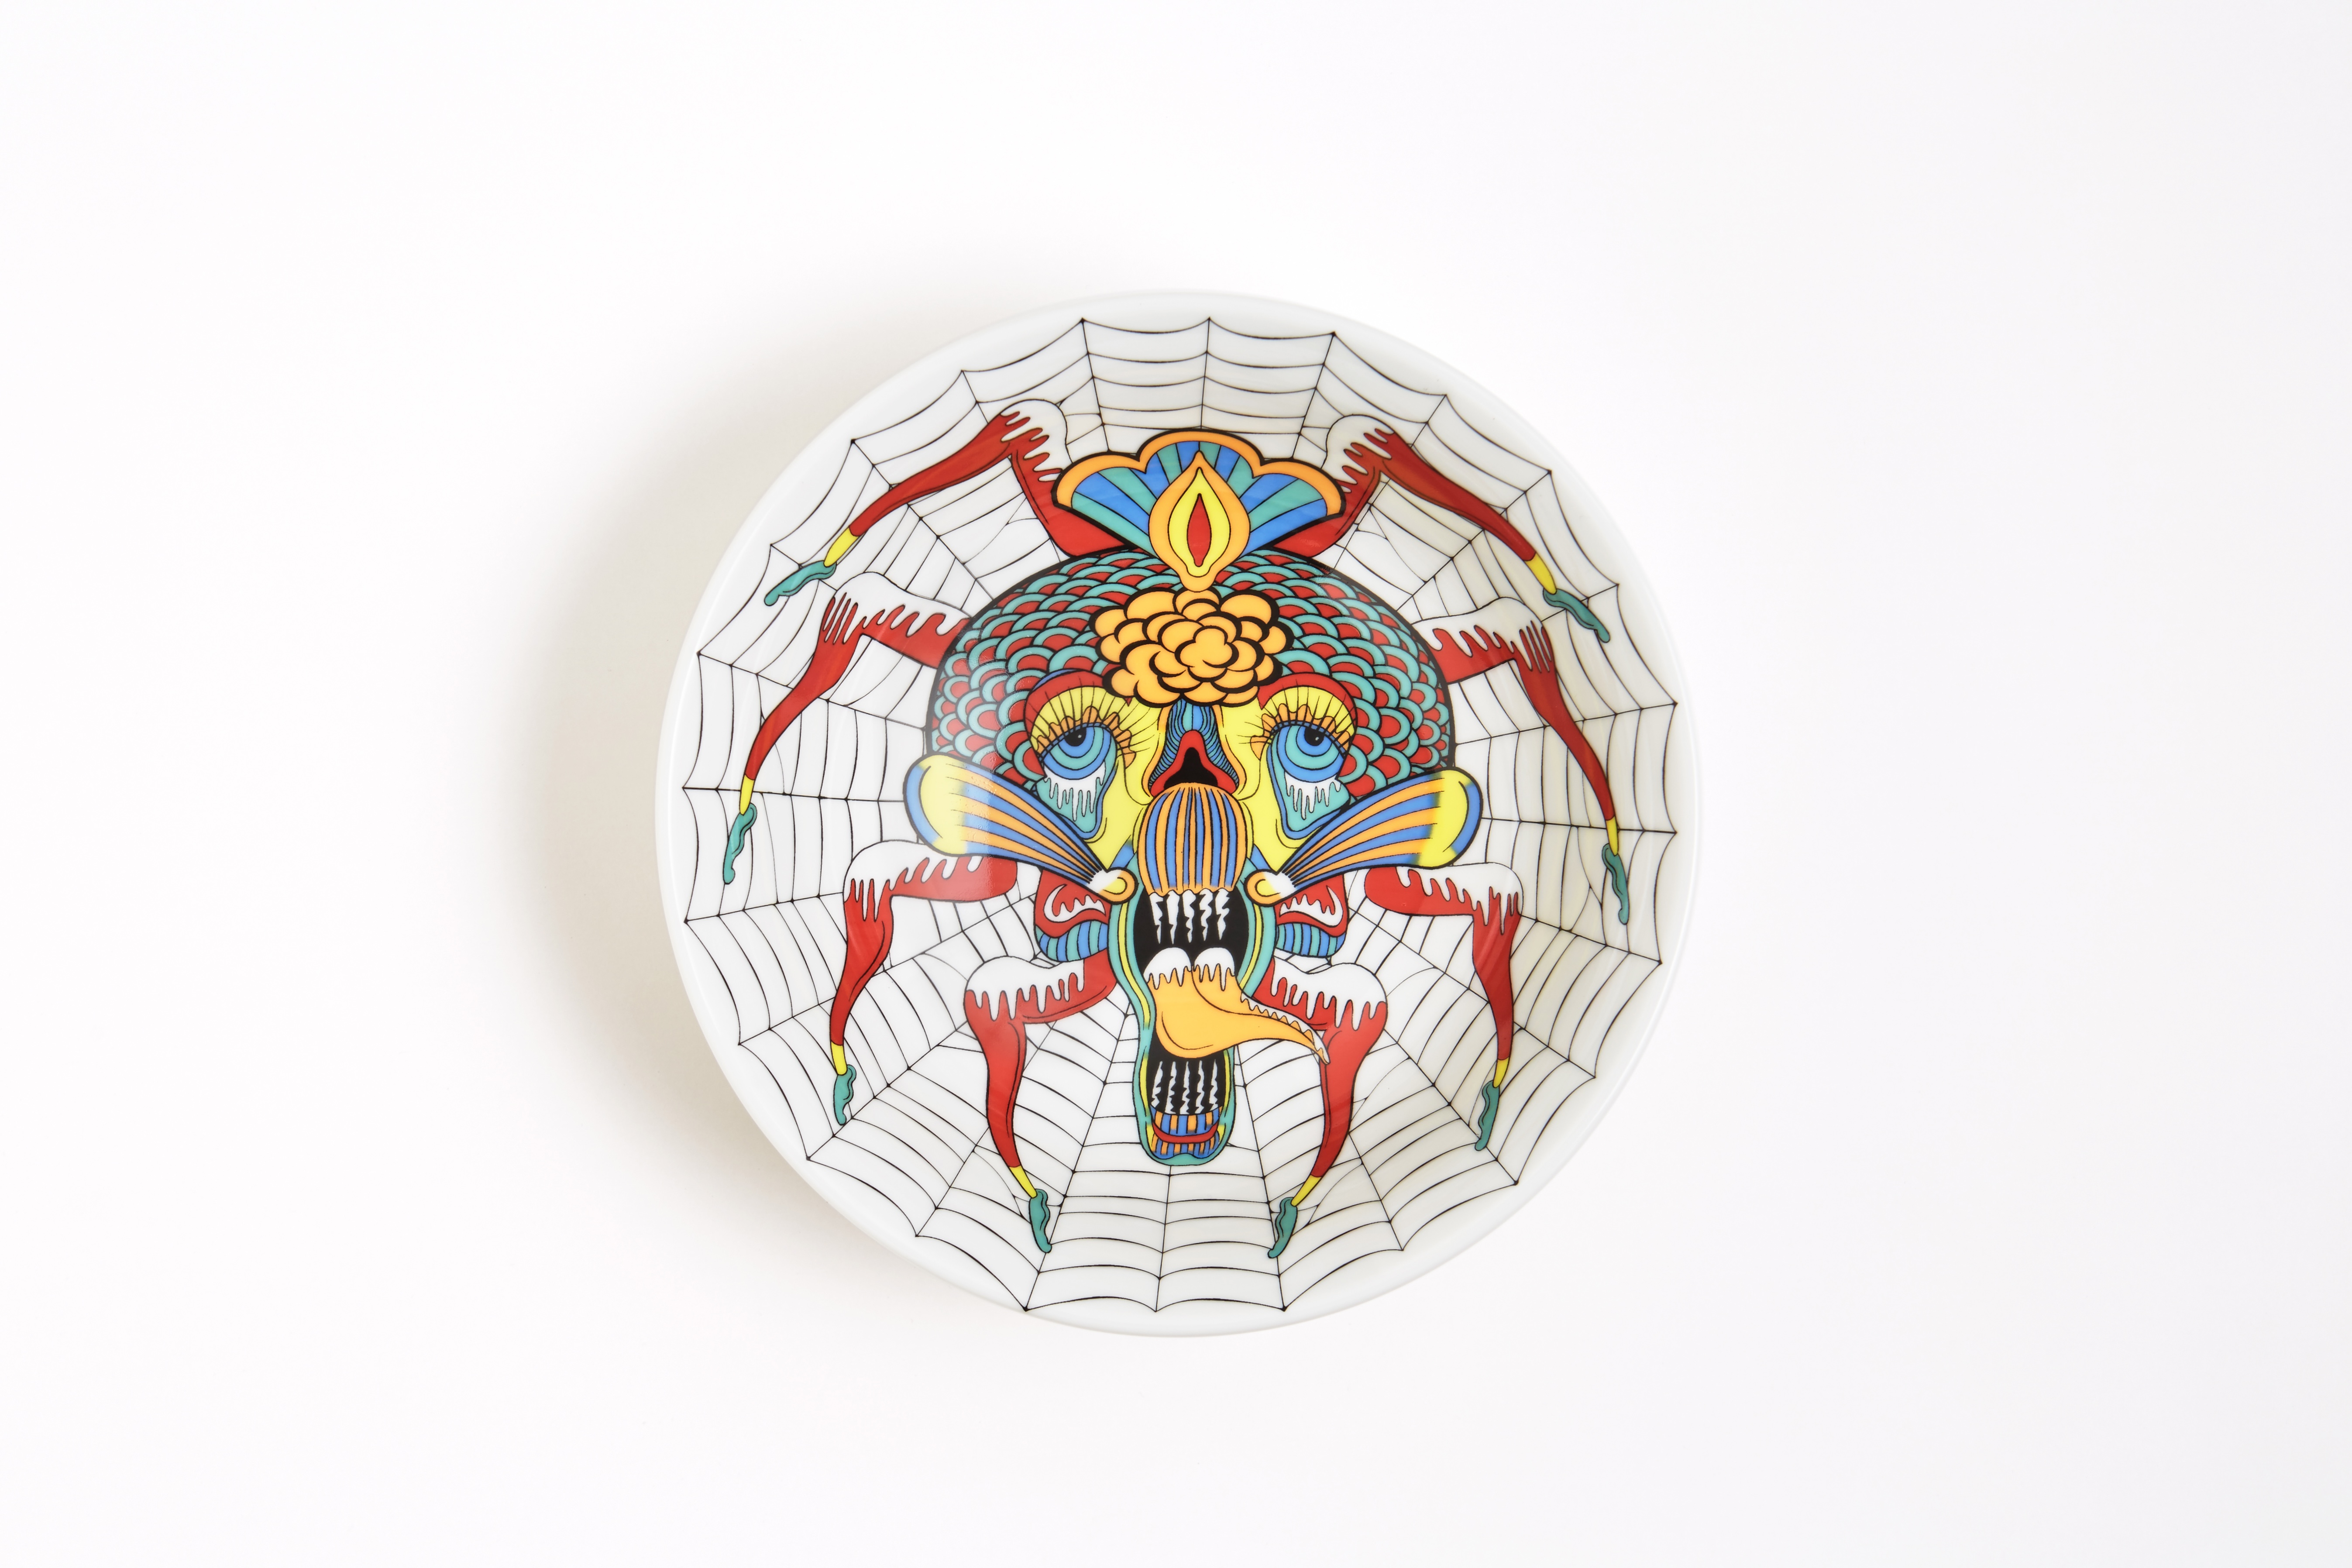 ramen bowl designed by Keiichi Tanaami